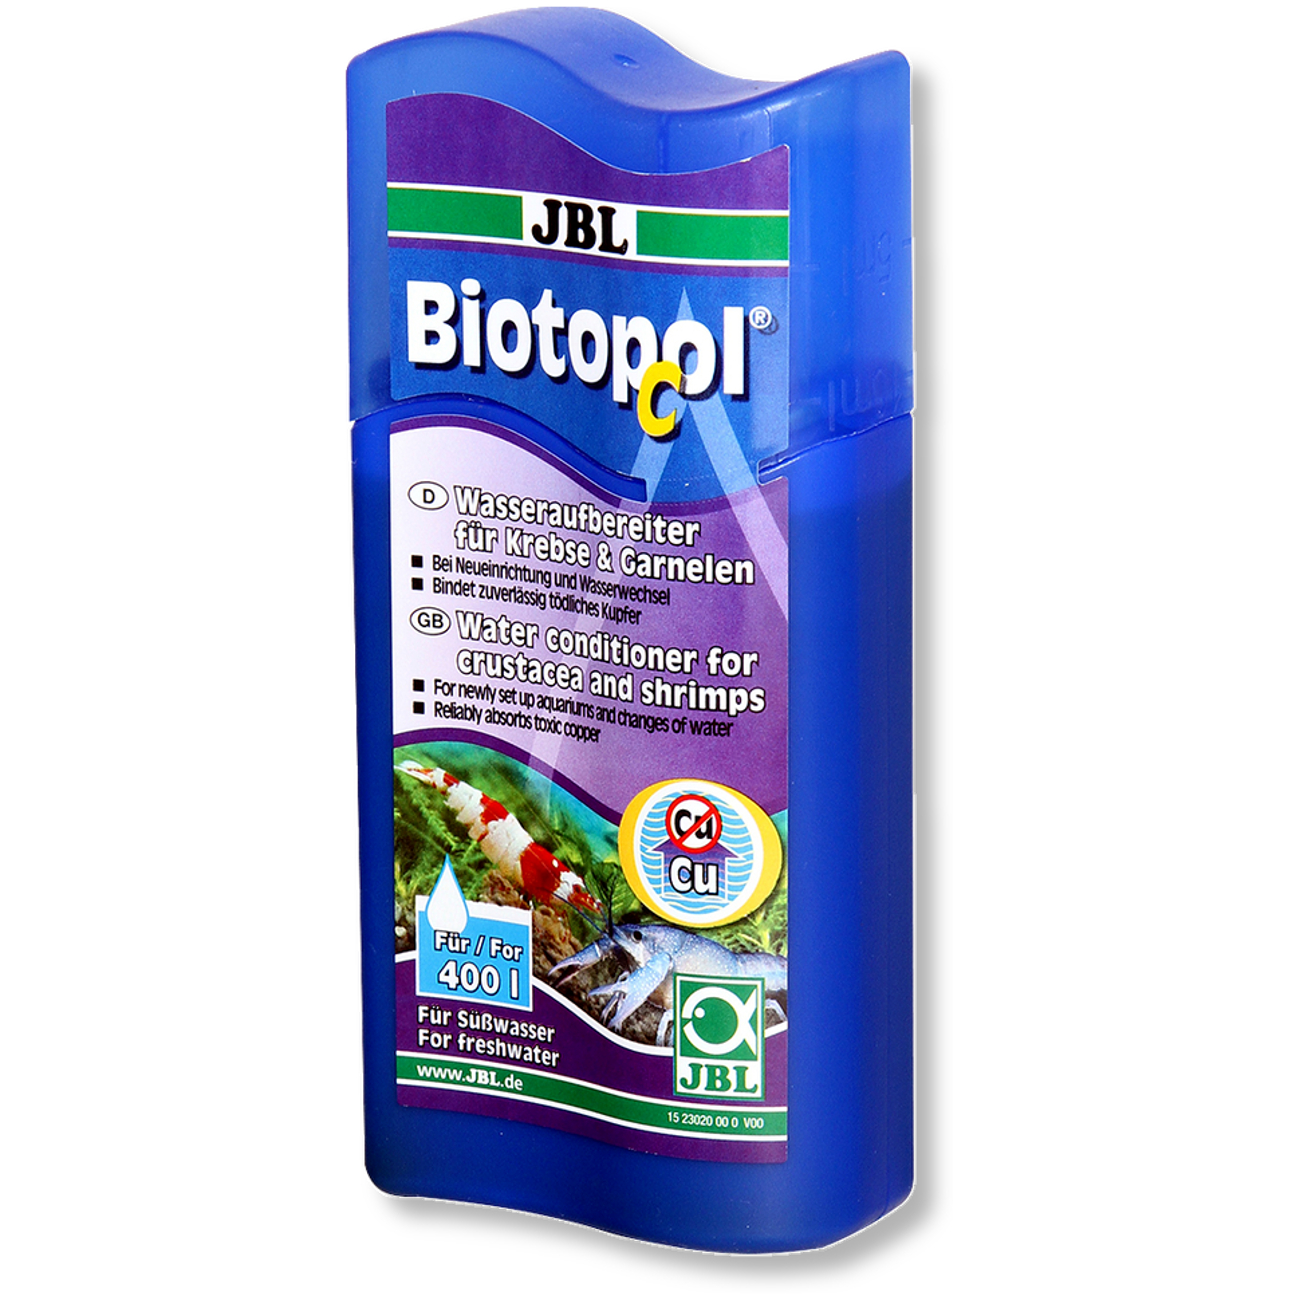 JBL Biotopol C 100 ml (Wasseraufbereiter)